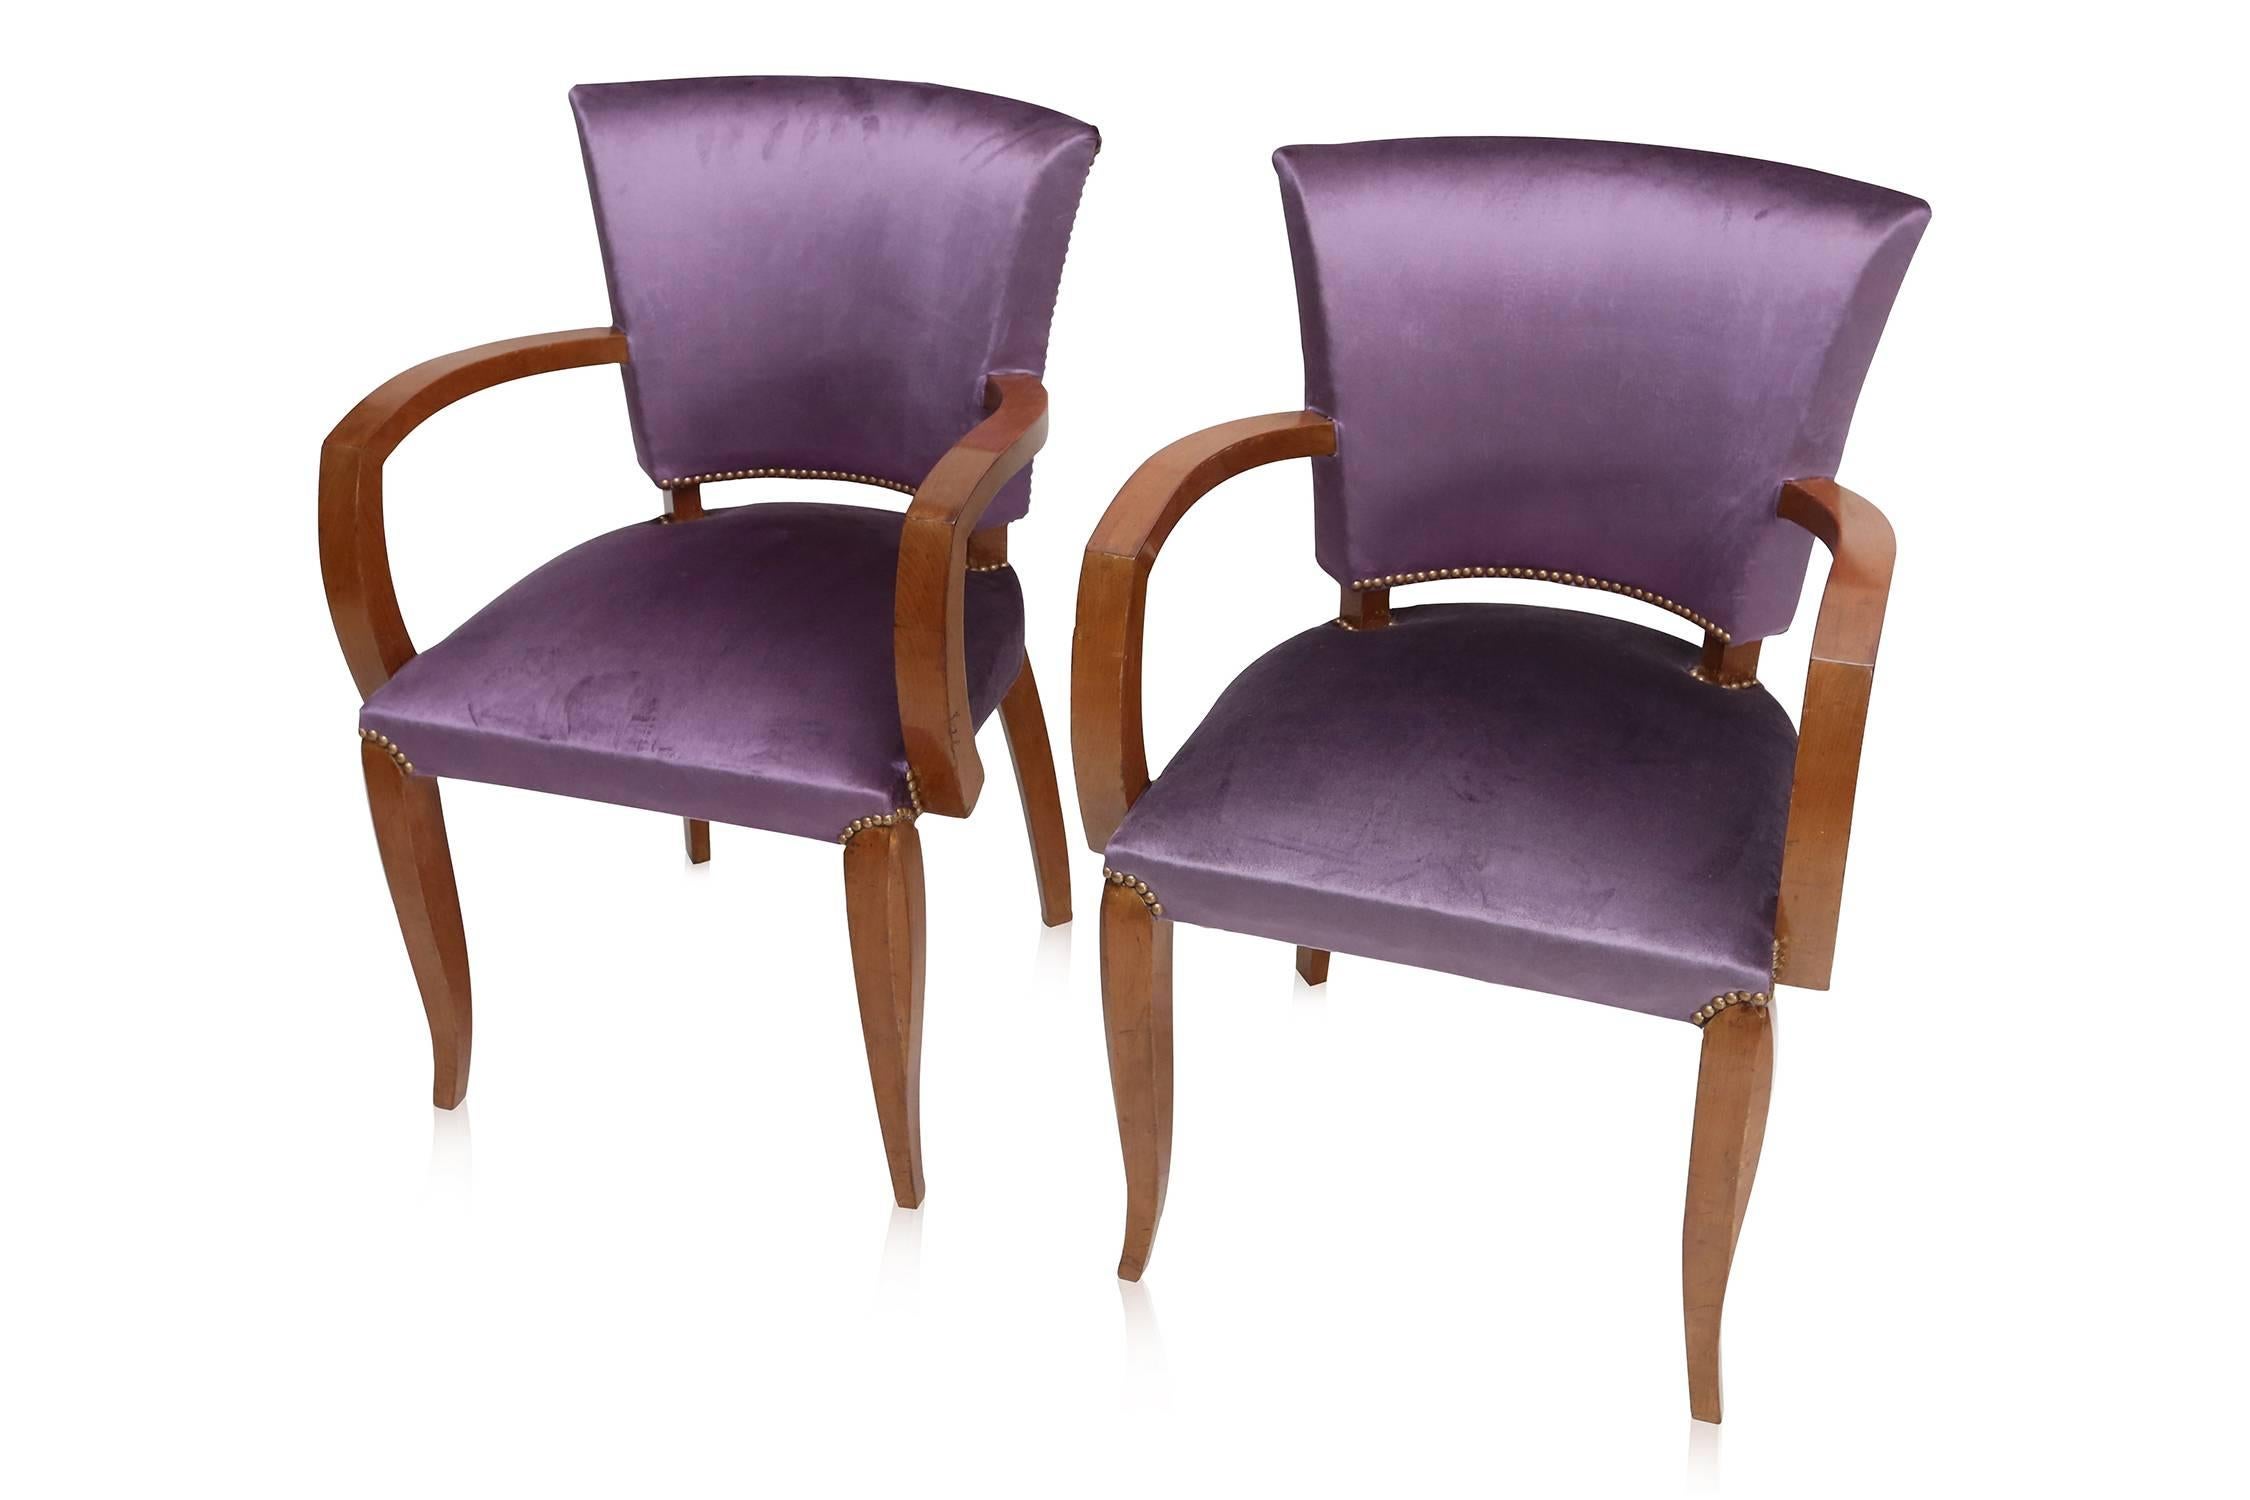 Upholstery Mahogany Art Deco armchairs with purple velvet upholstery